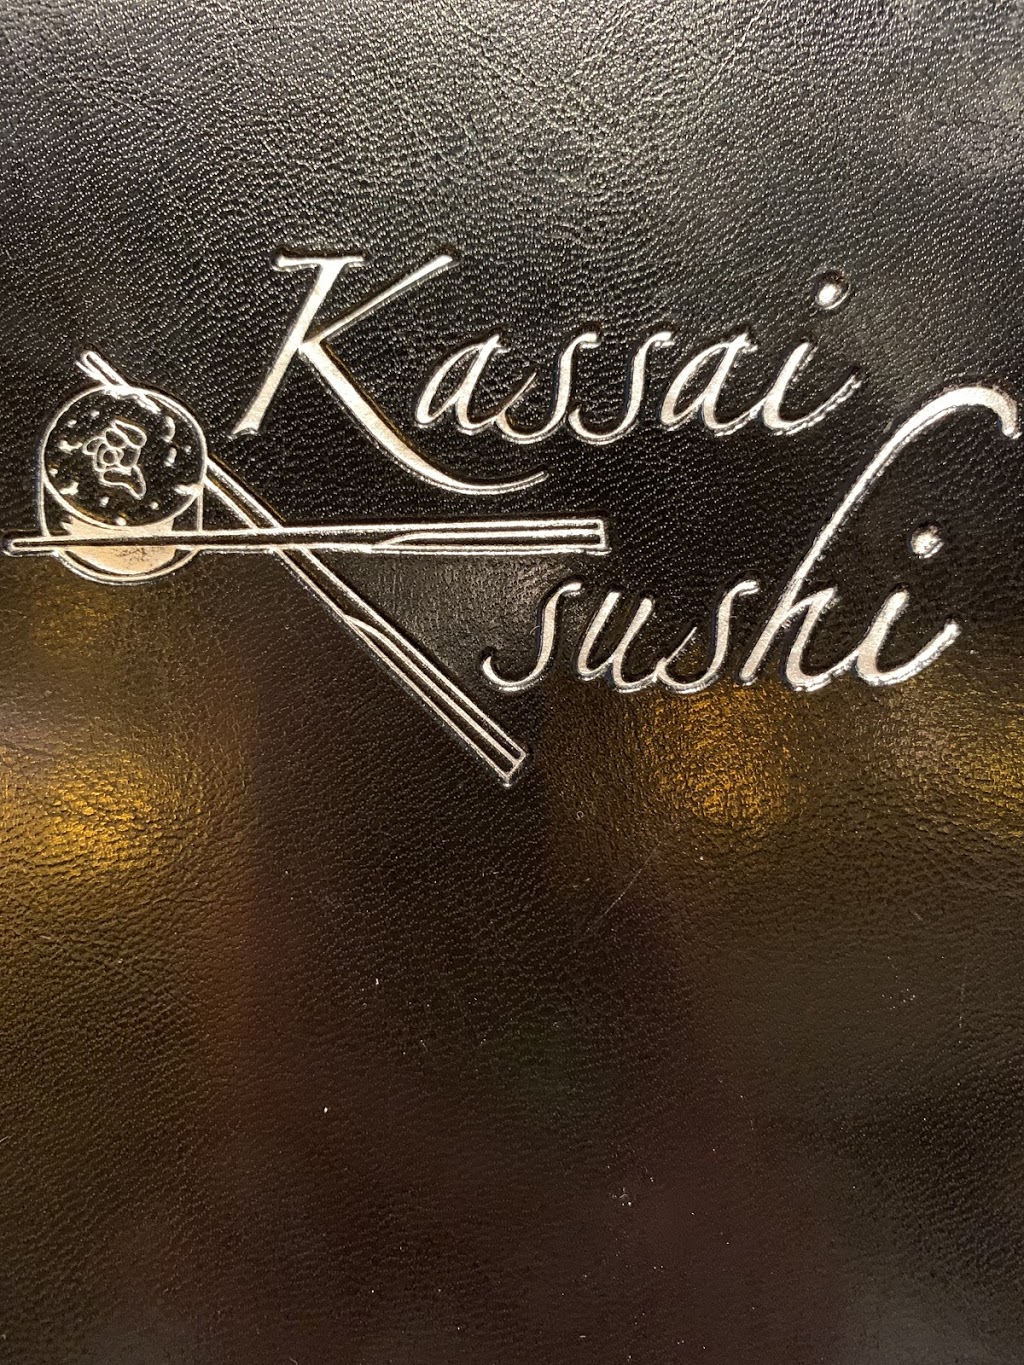 Kassai sushi | 731 Quebec St, Denver, CO 80220 | Phone: (303) 320-0833